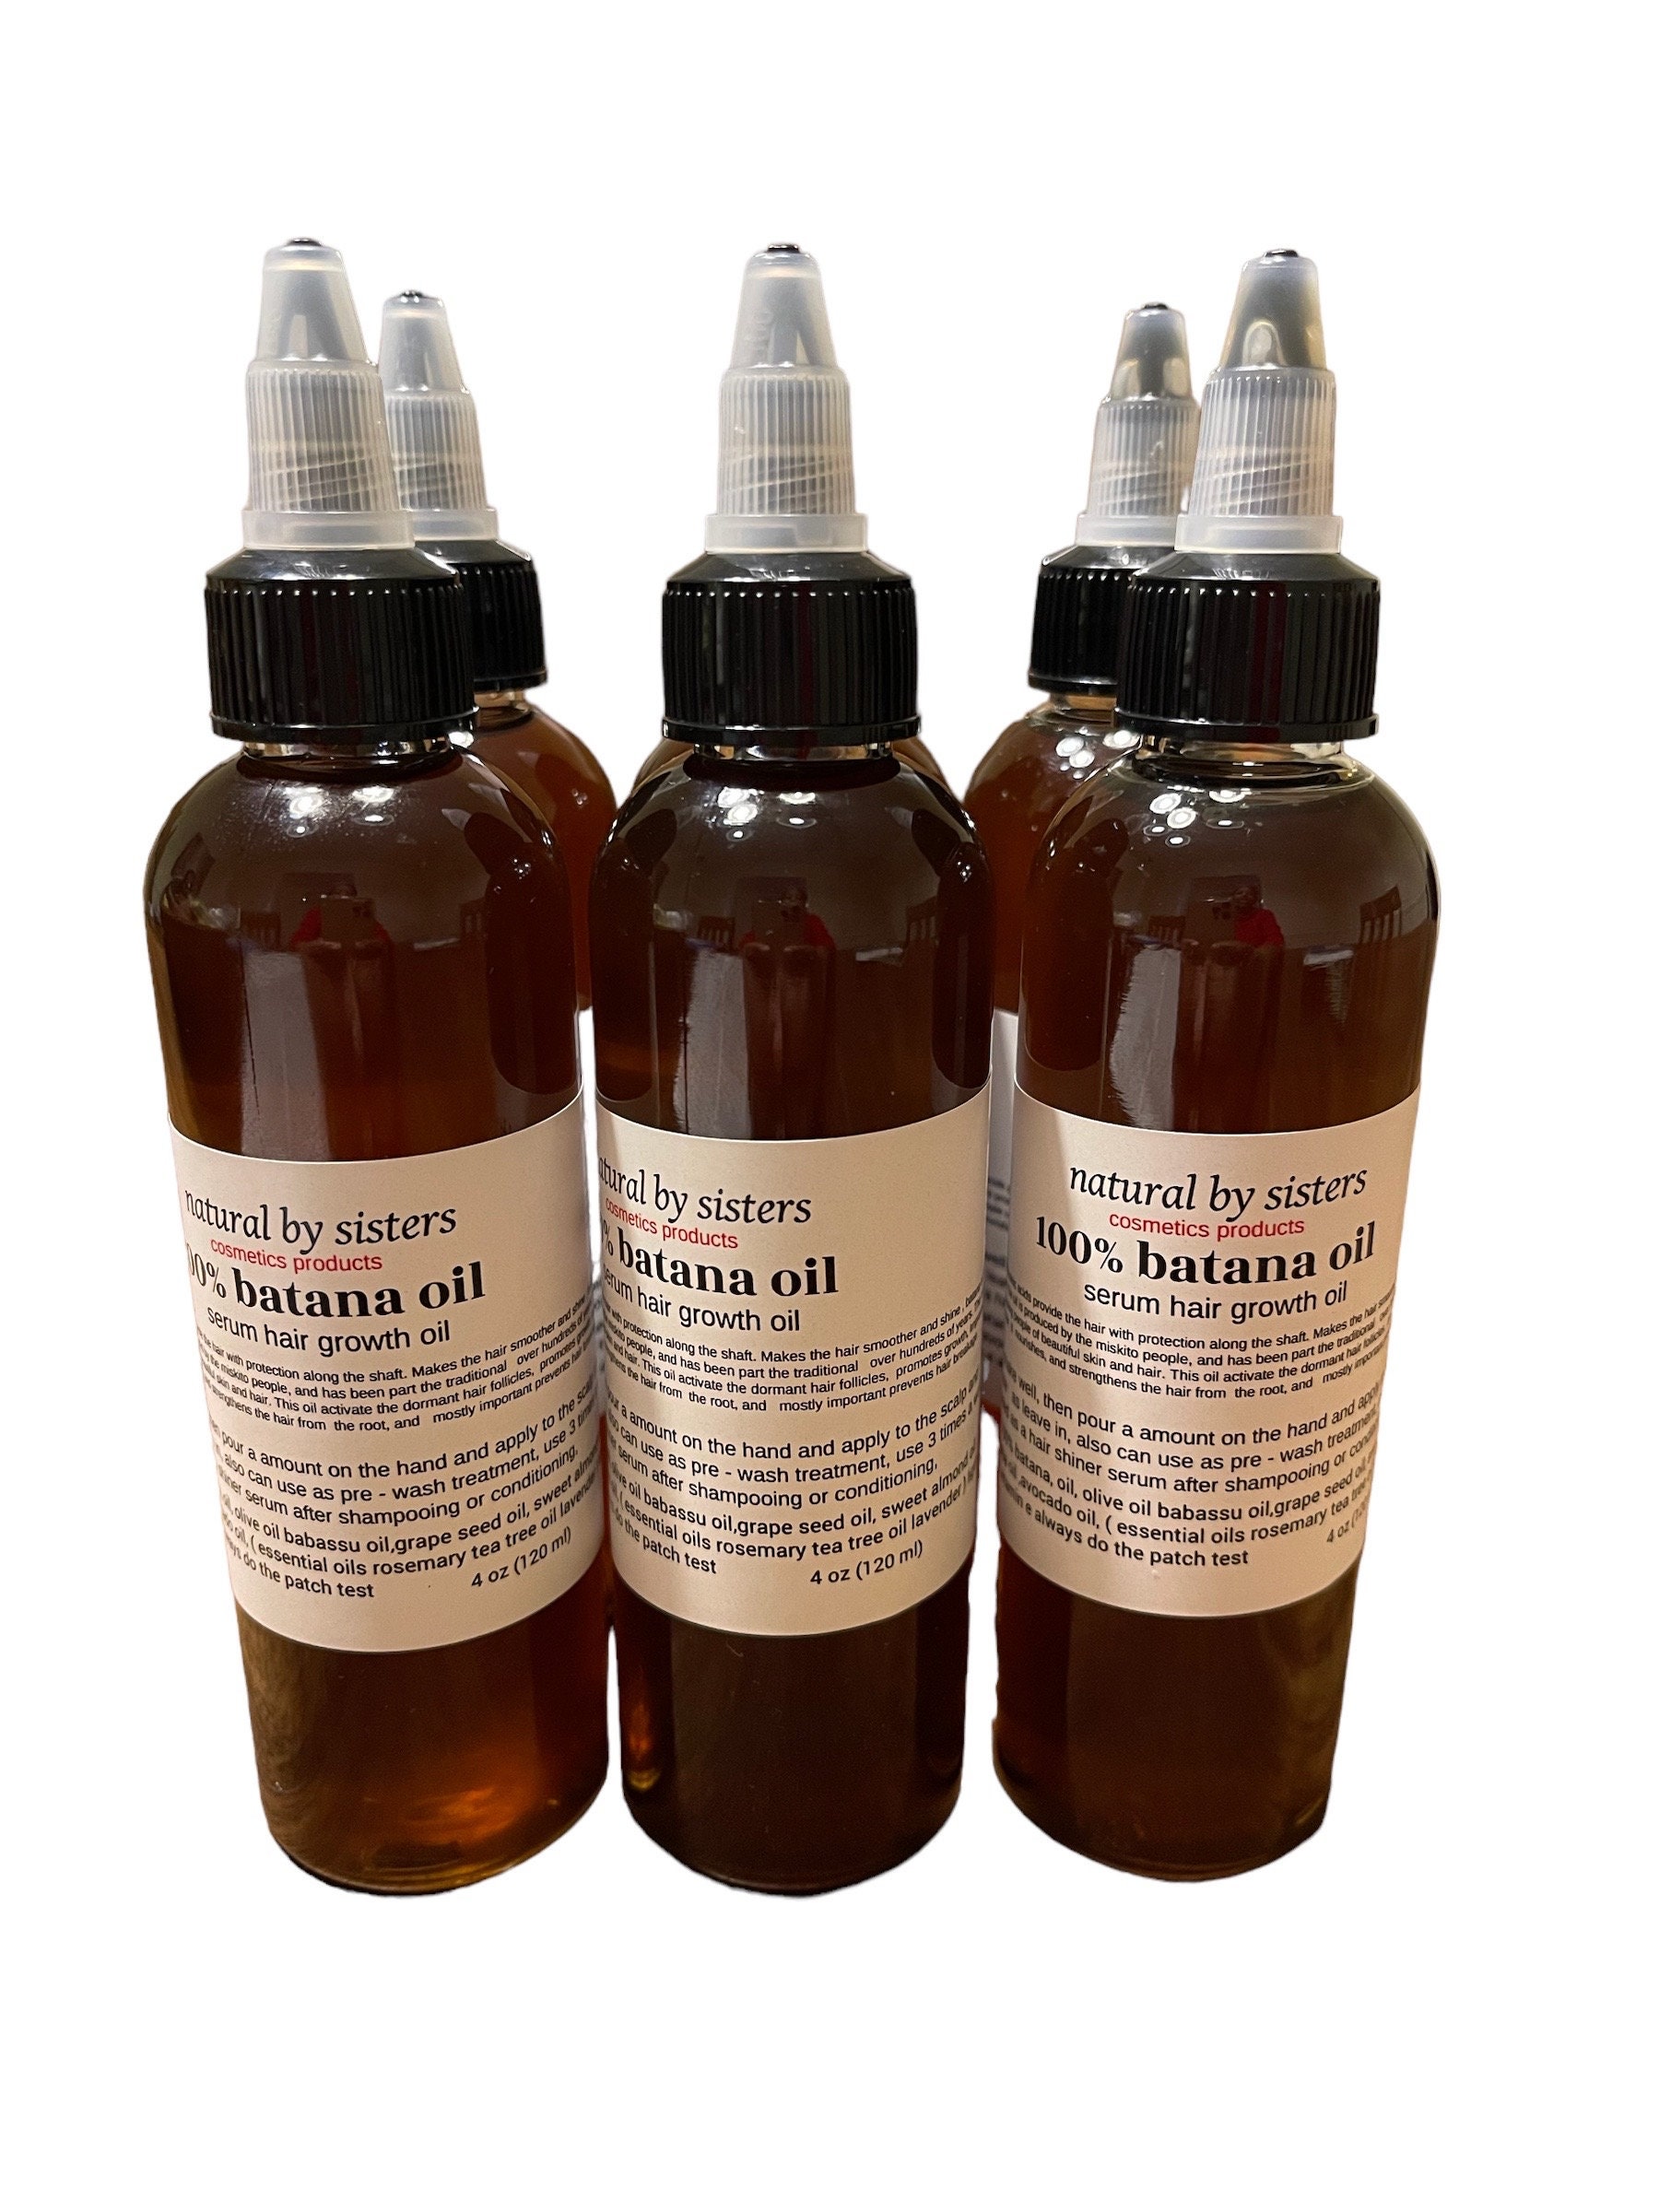 100% Natural Batana Oil 16 oz (454G) – HolisticDepot